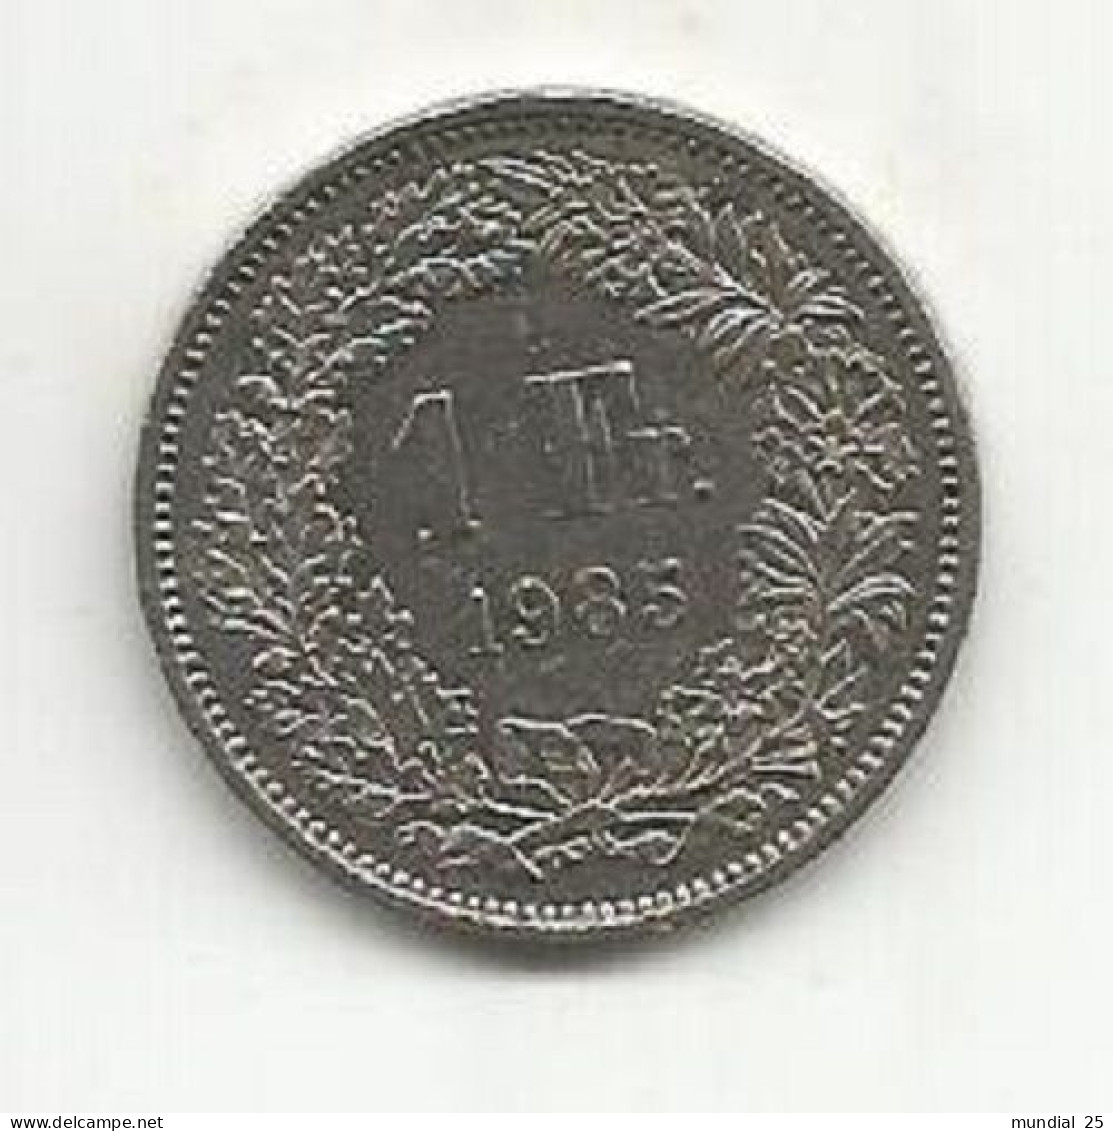 SWITZERLAND 1 FRANC 1985 - 1 Franc